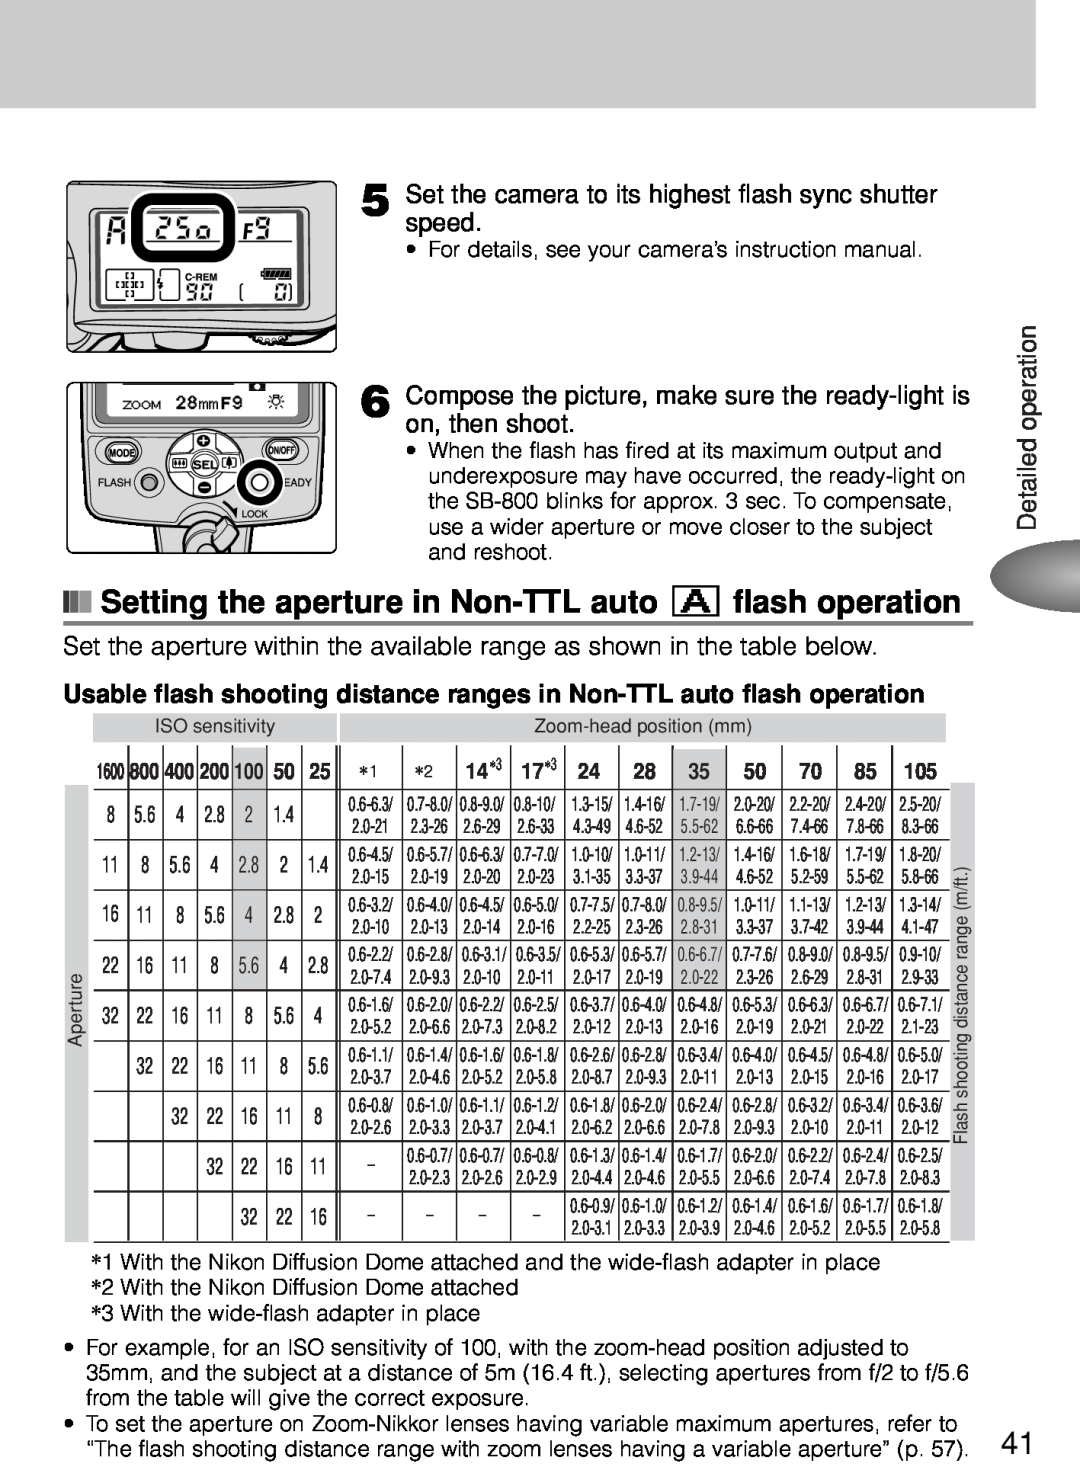 Nikon SB-800 instruction manual Setting the aperture in Non-TTL auto A flash operation, 14∗3 